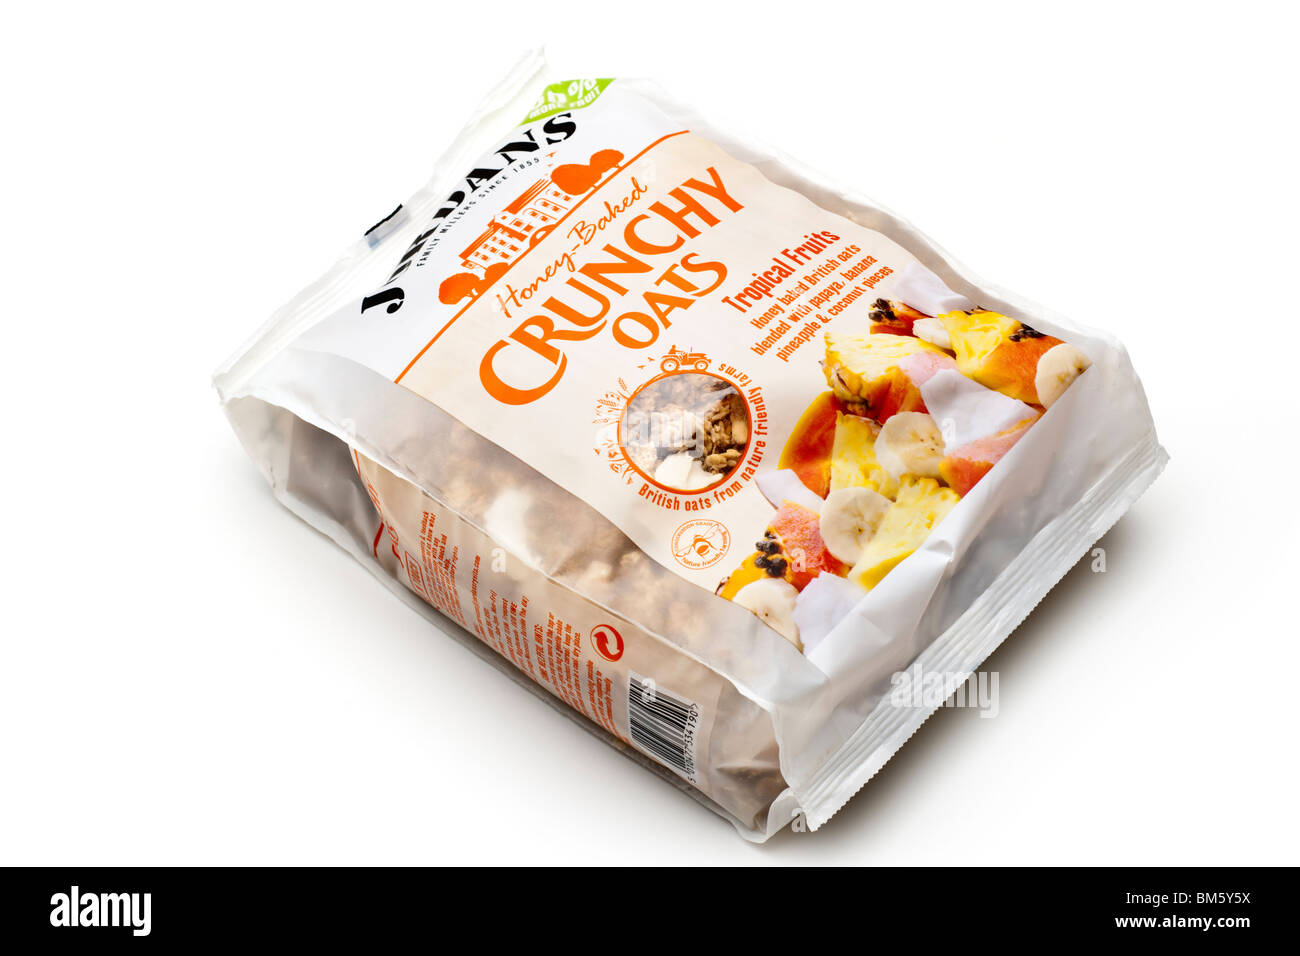 Cellophane bag of Jordans Crunchy Oats Stock Photo